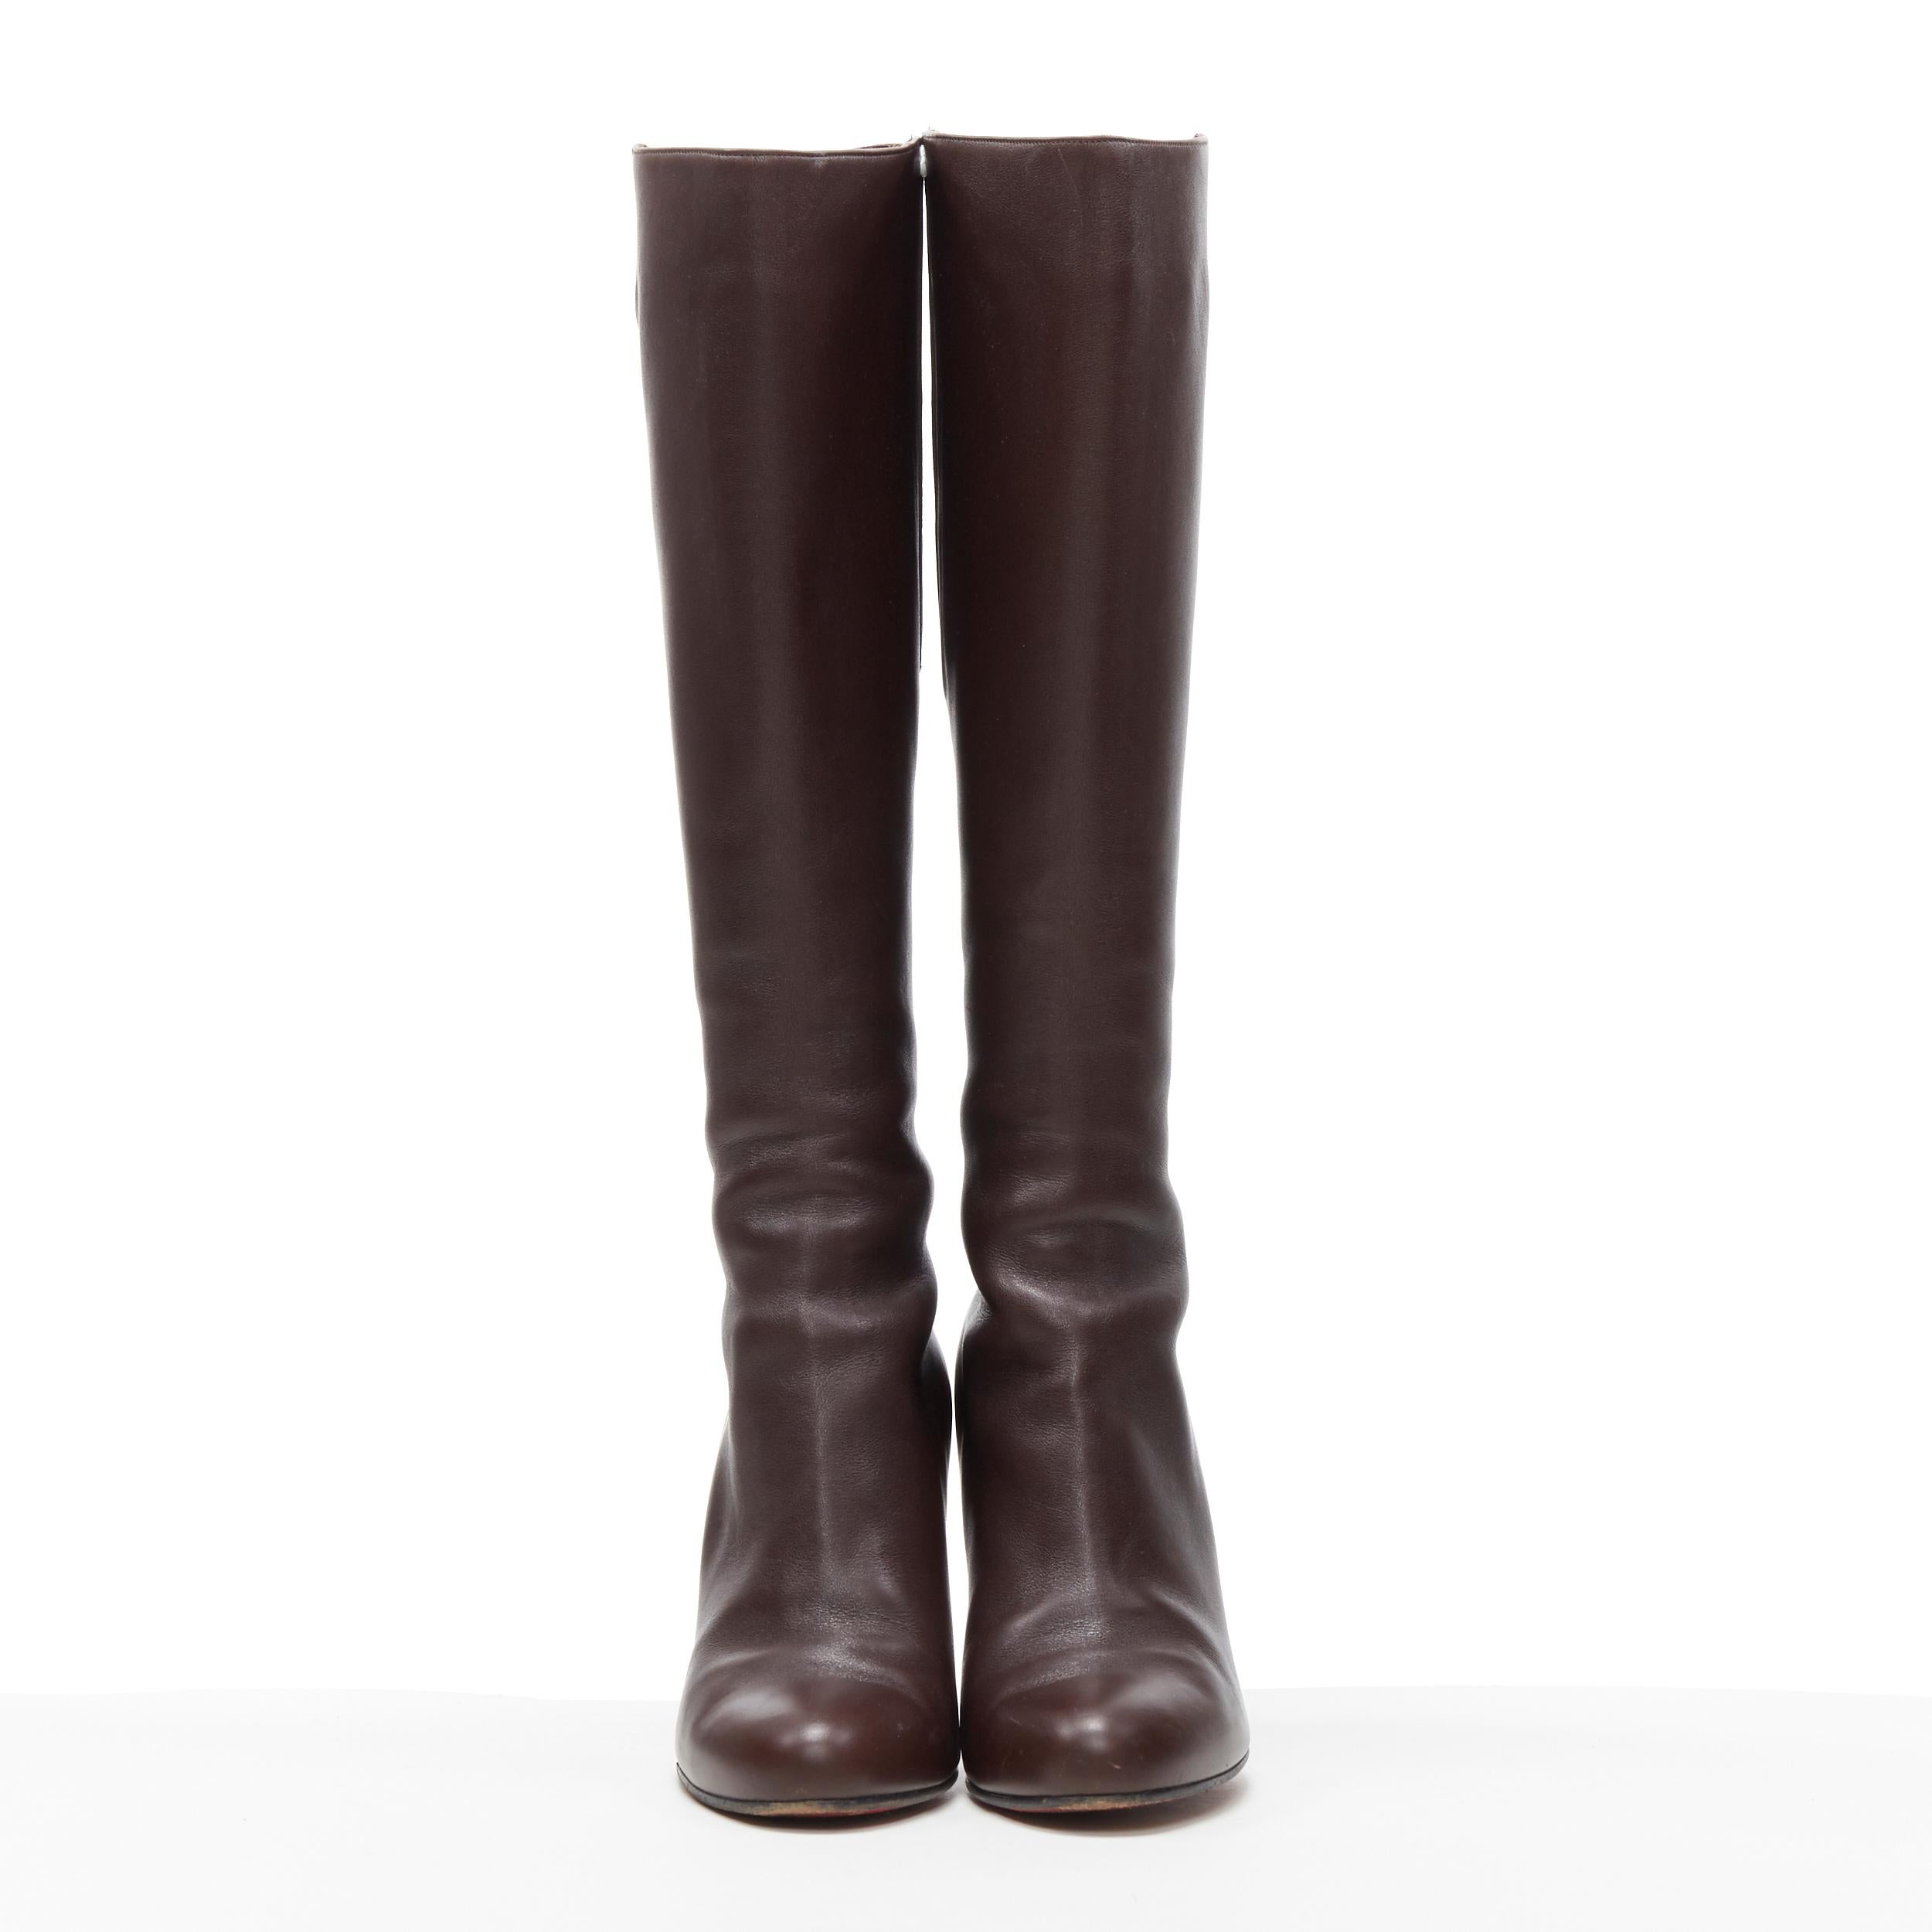 Black CHRISTIAN LOUBOUTIN dark brown leather almond toe high heel tall boots EU39